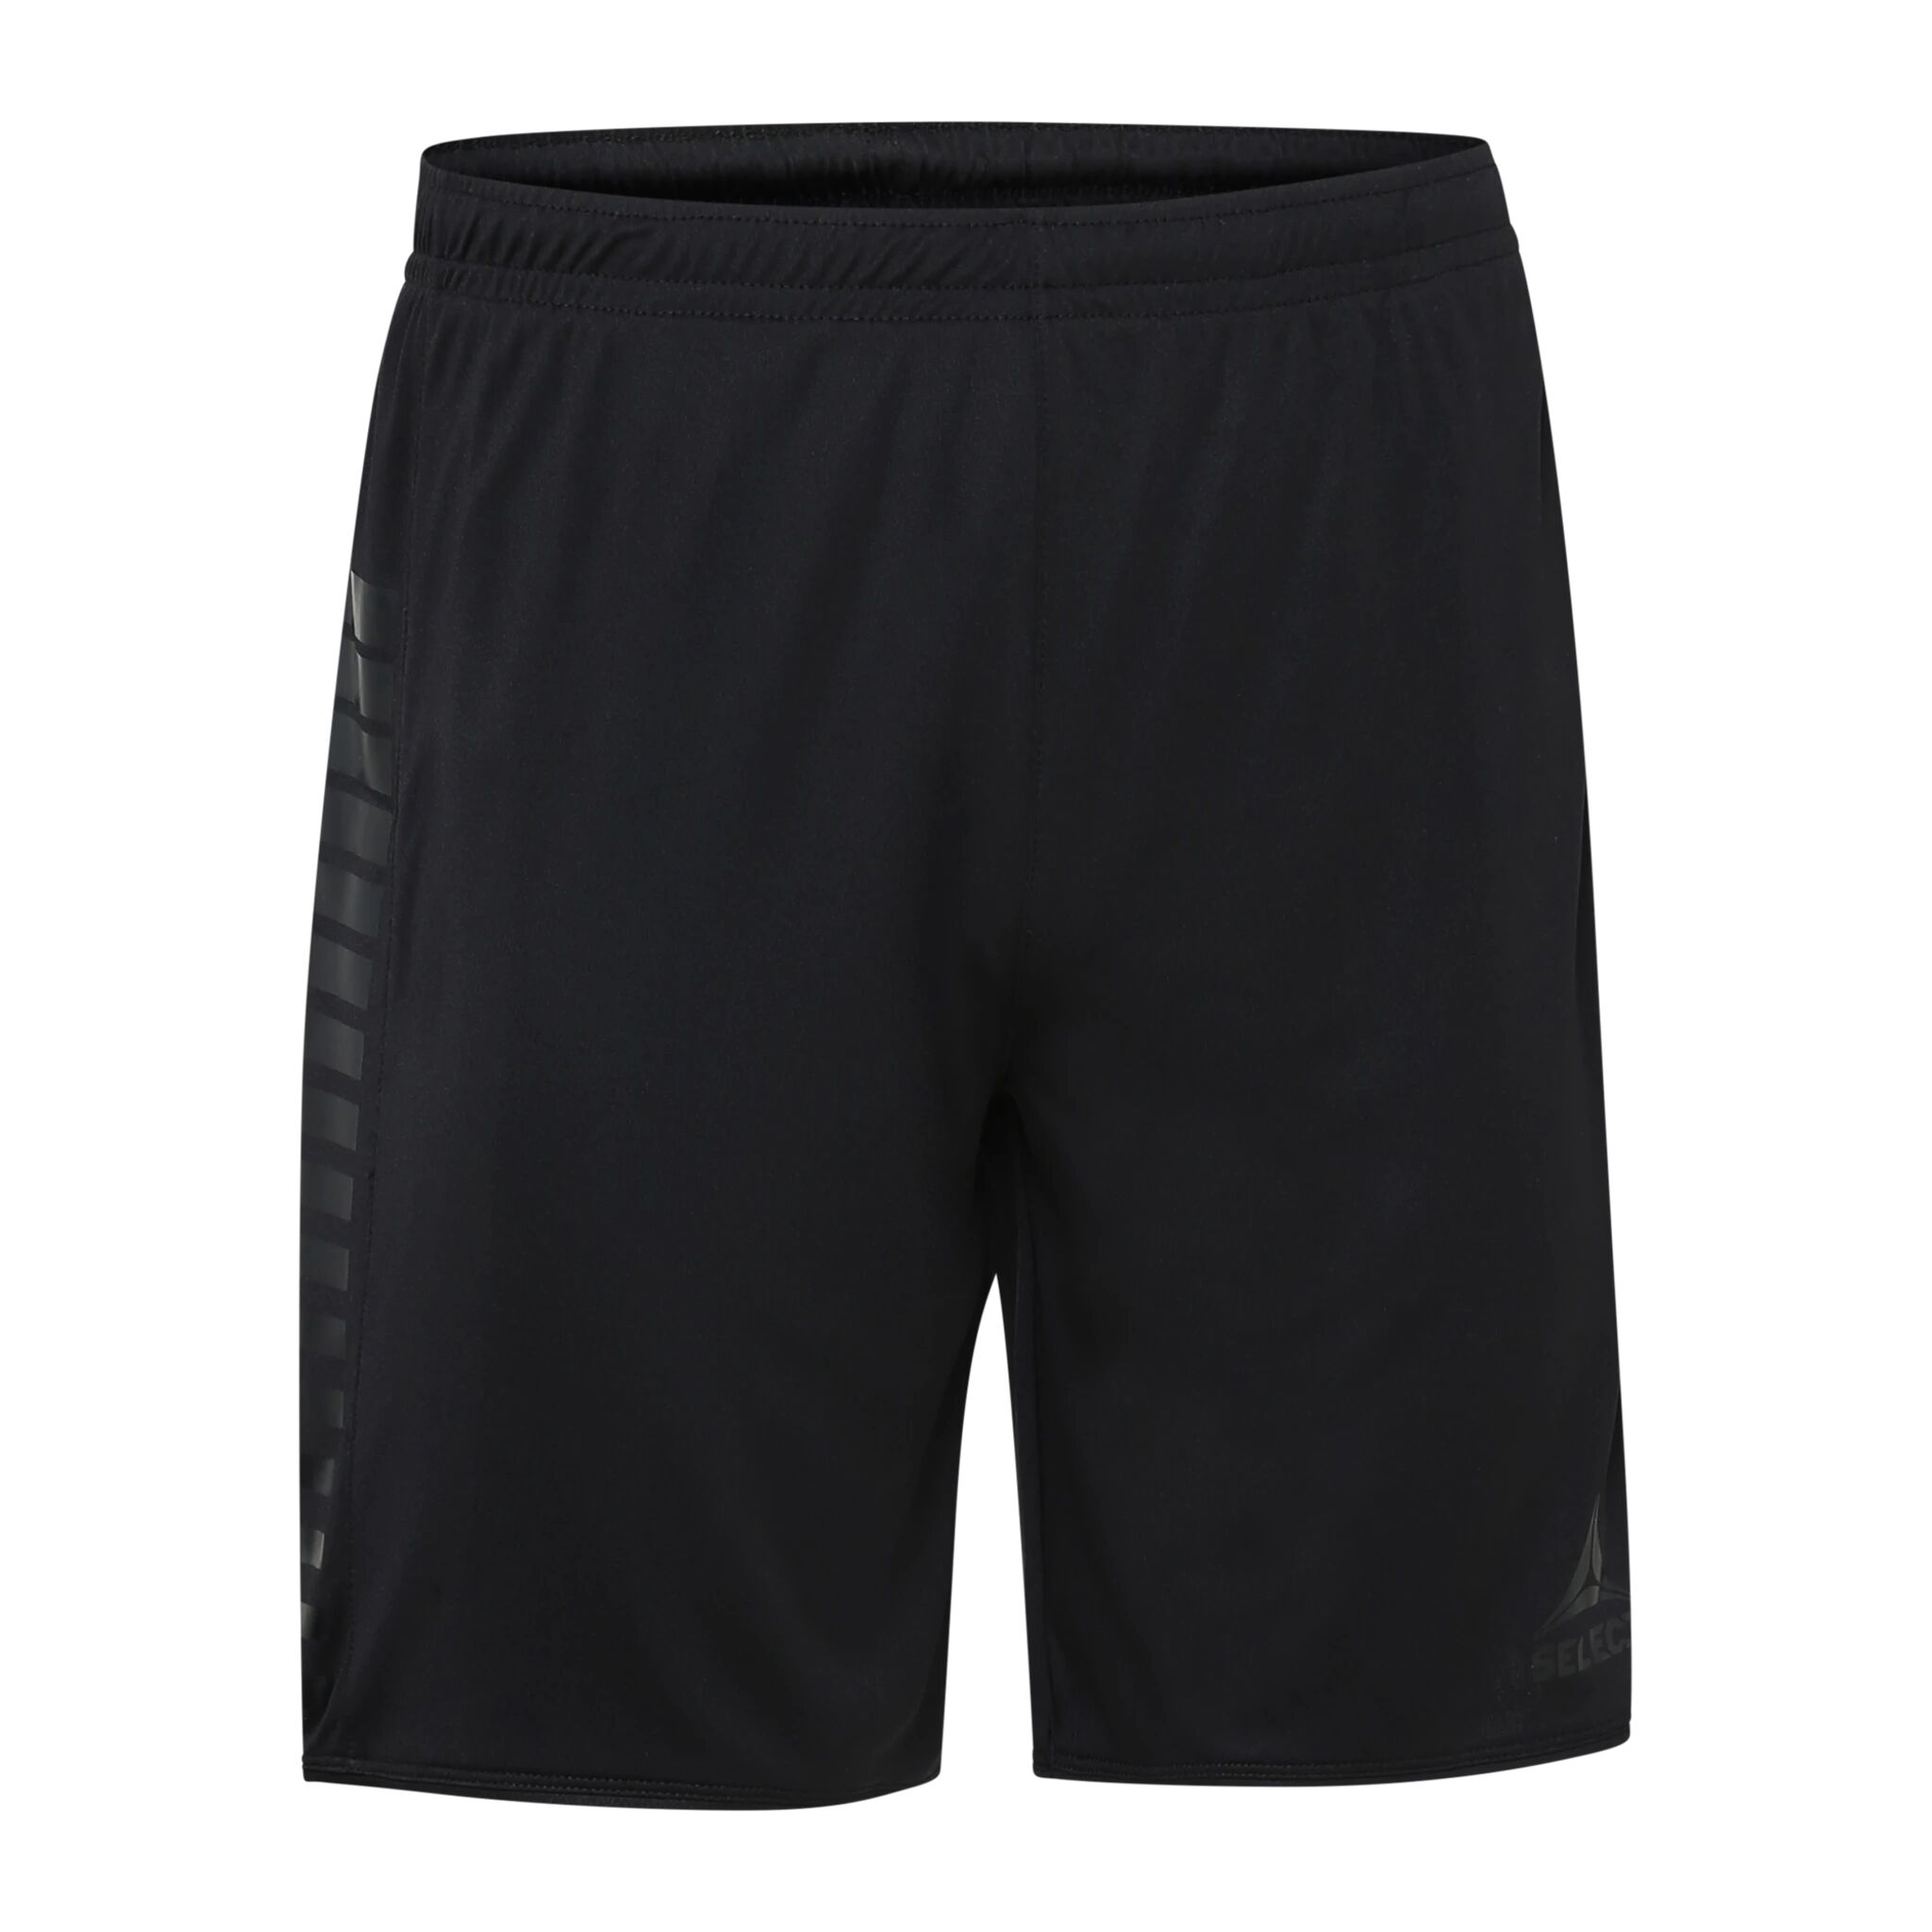 Select Player shorts Argentina, shorts Junior/Senior 152 BLACK/BLACK